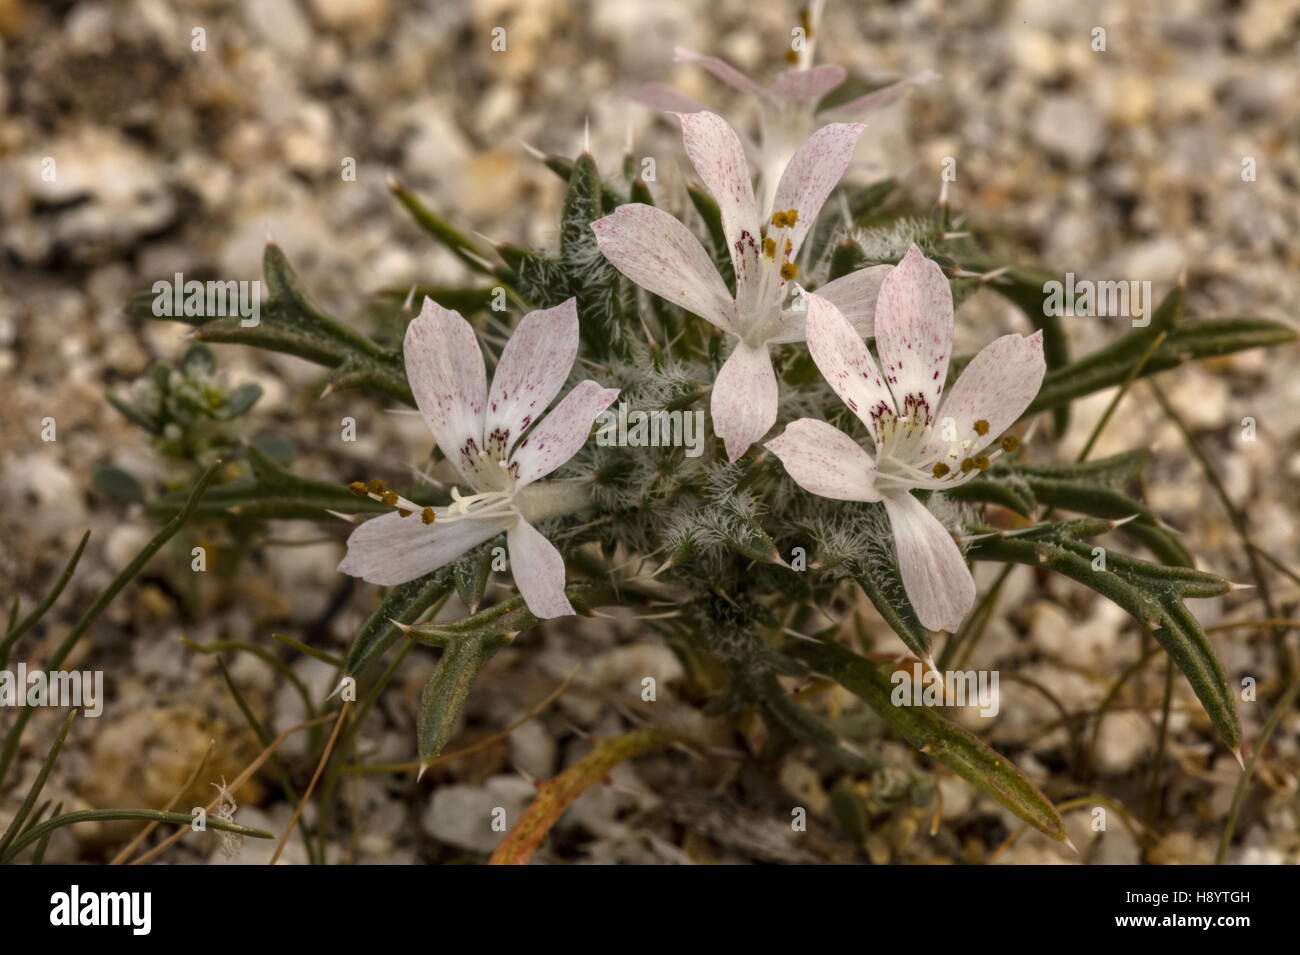 Desert calico, Loeseliastrum matthewsii - annual member of Polemoniaceae, in flower in the Sonoran Desert. Stock Photo